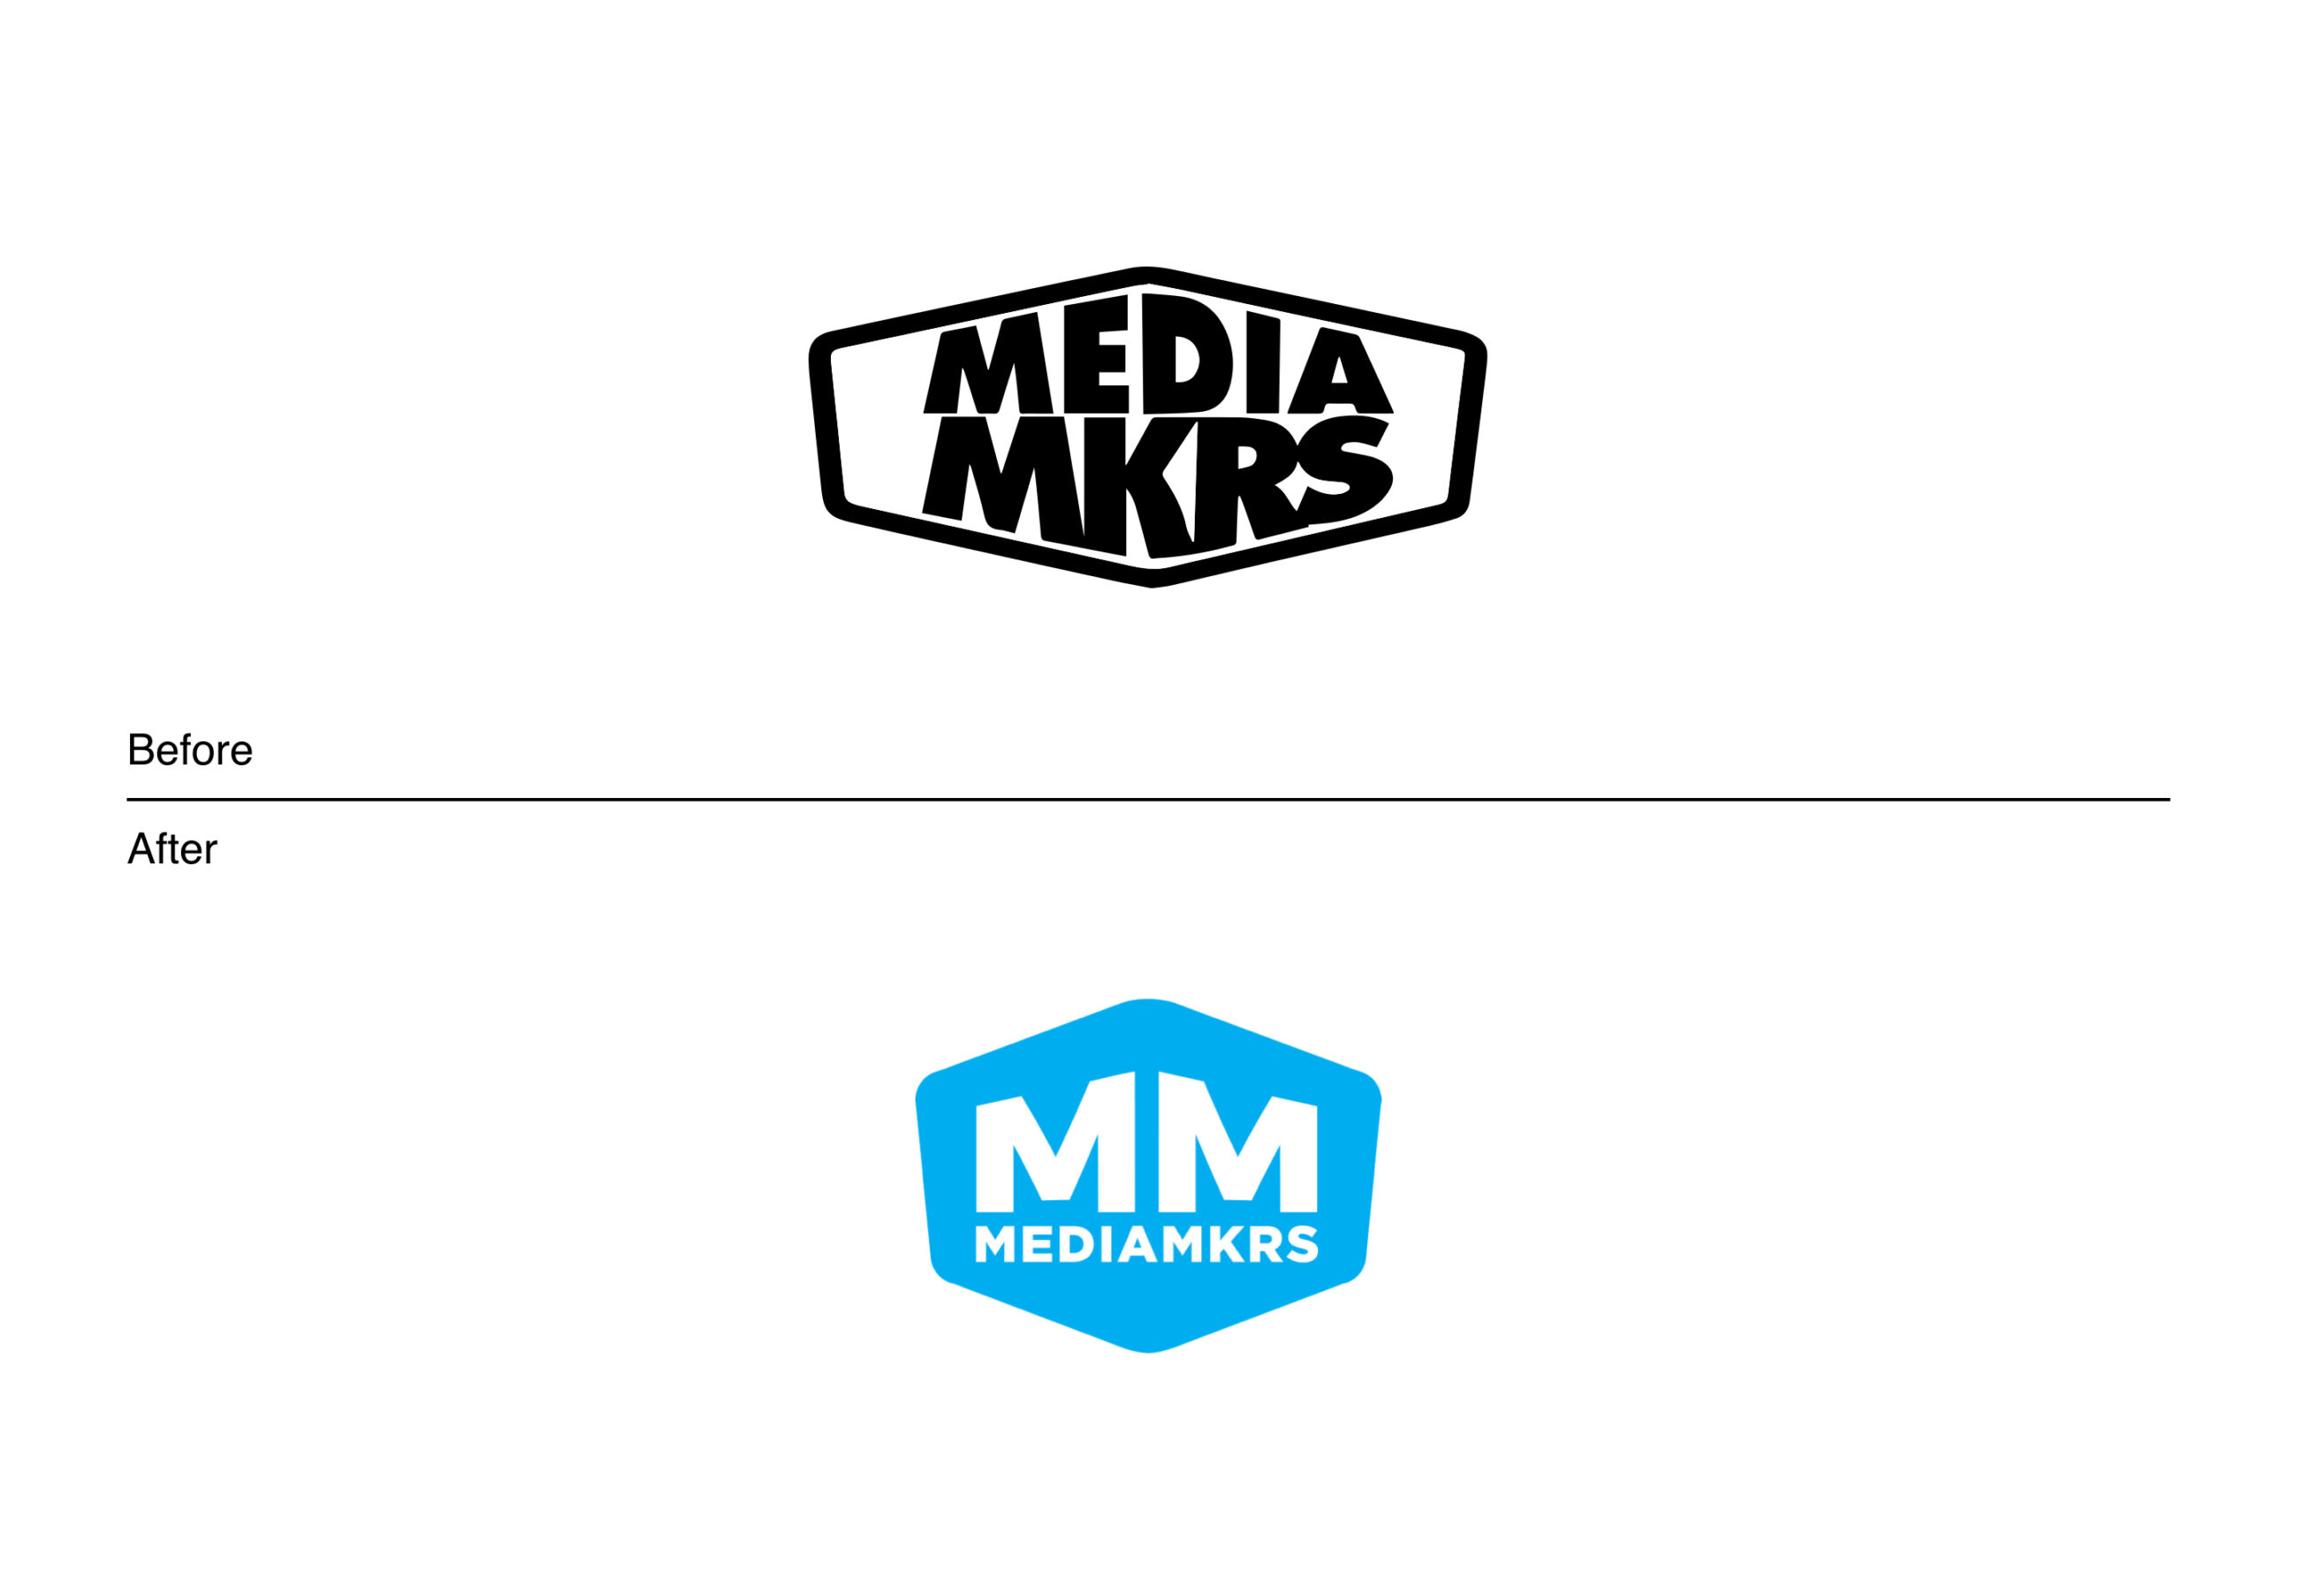 Mediamkrs logo before after